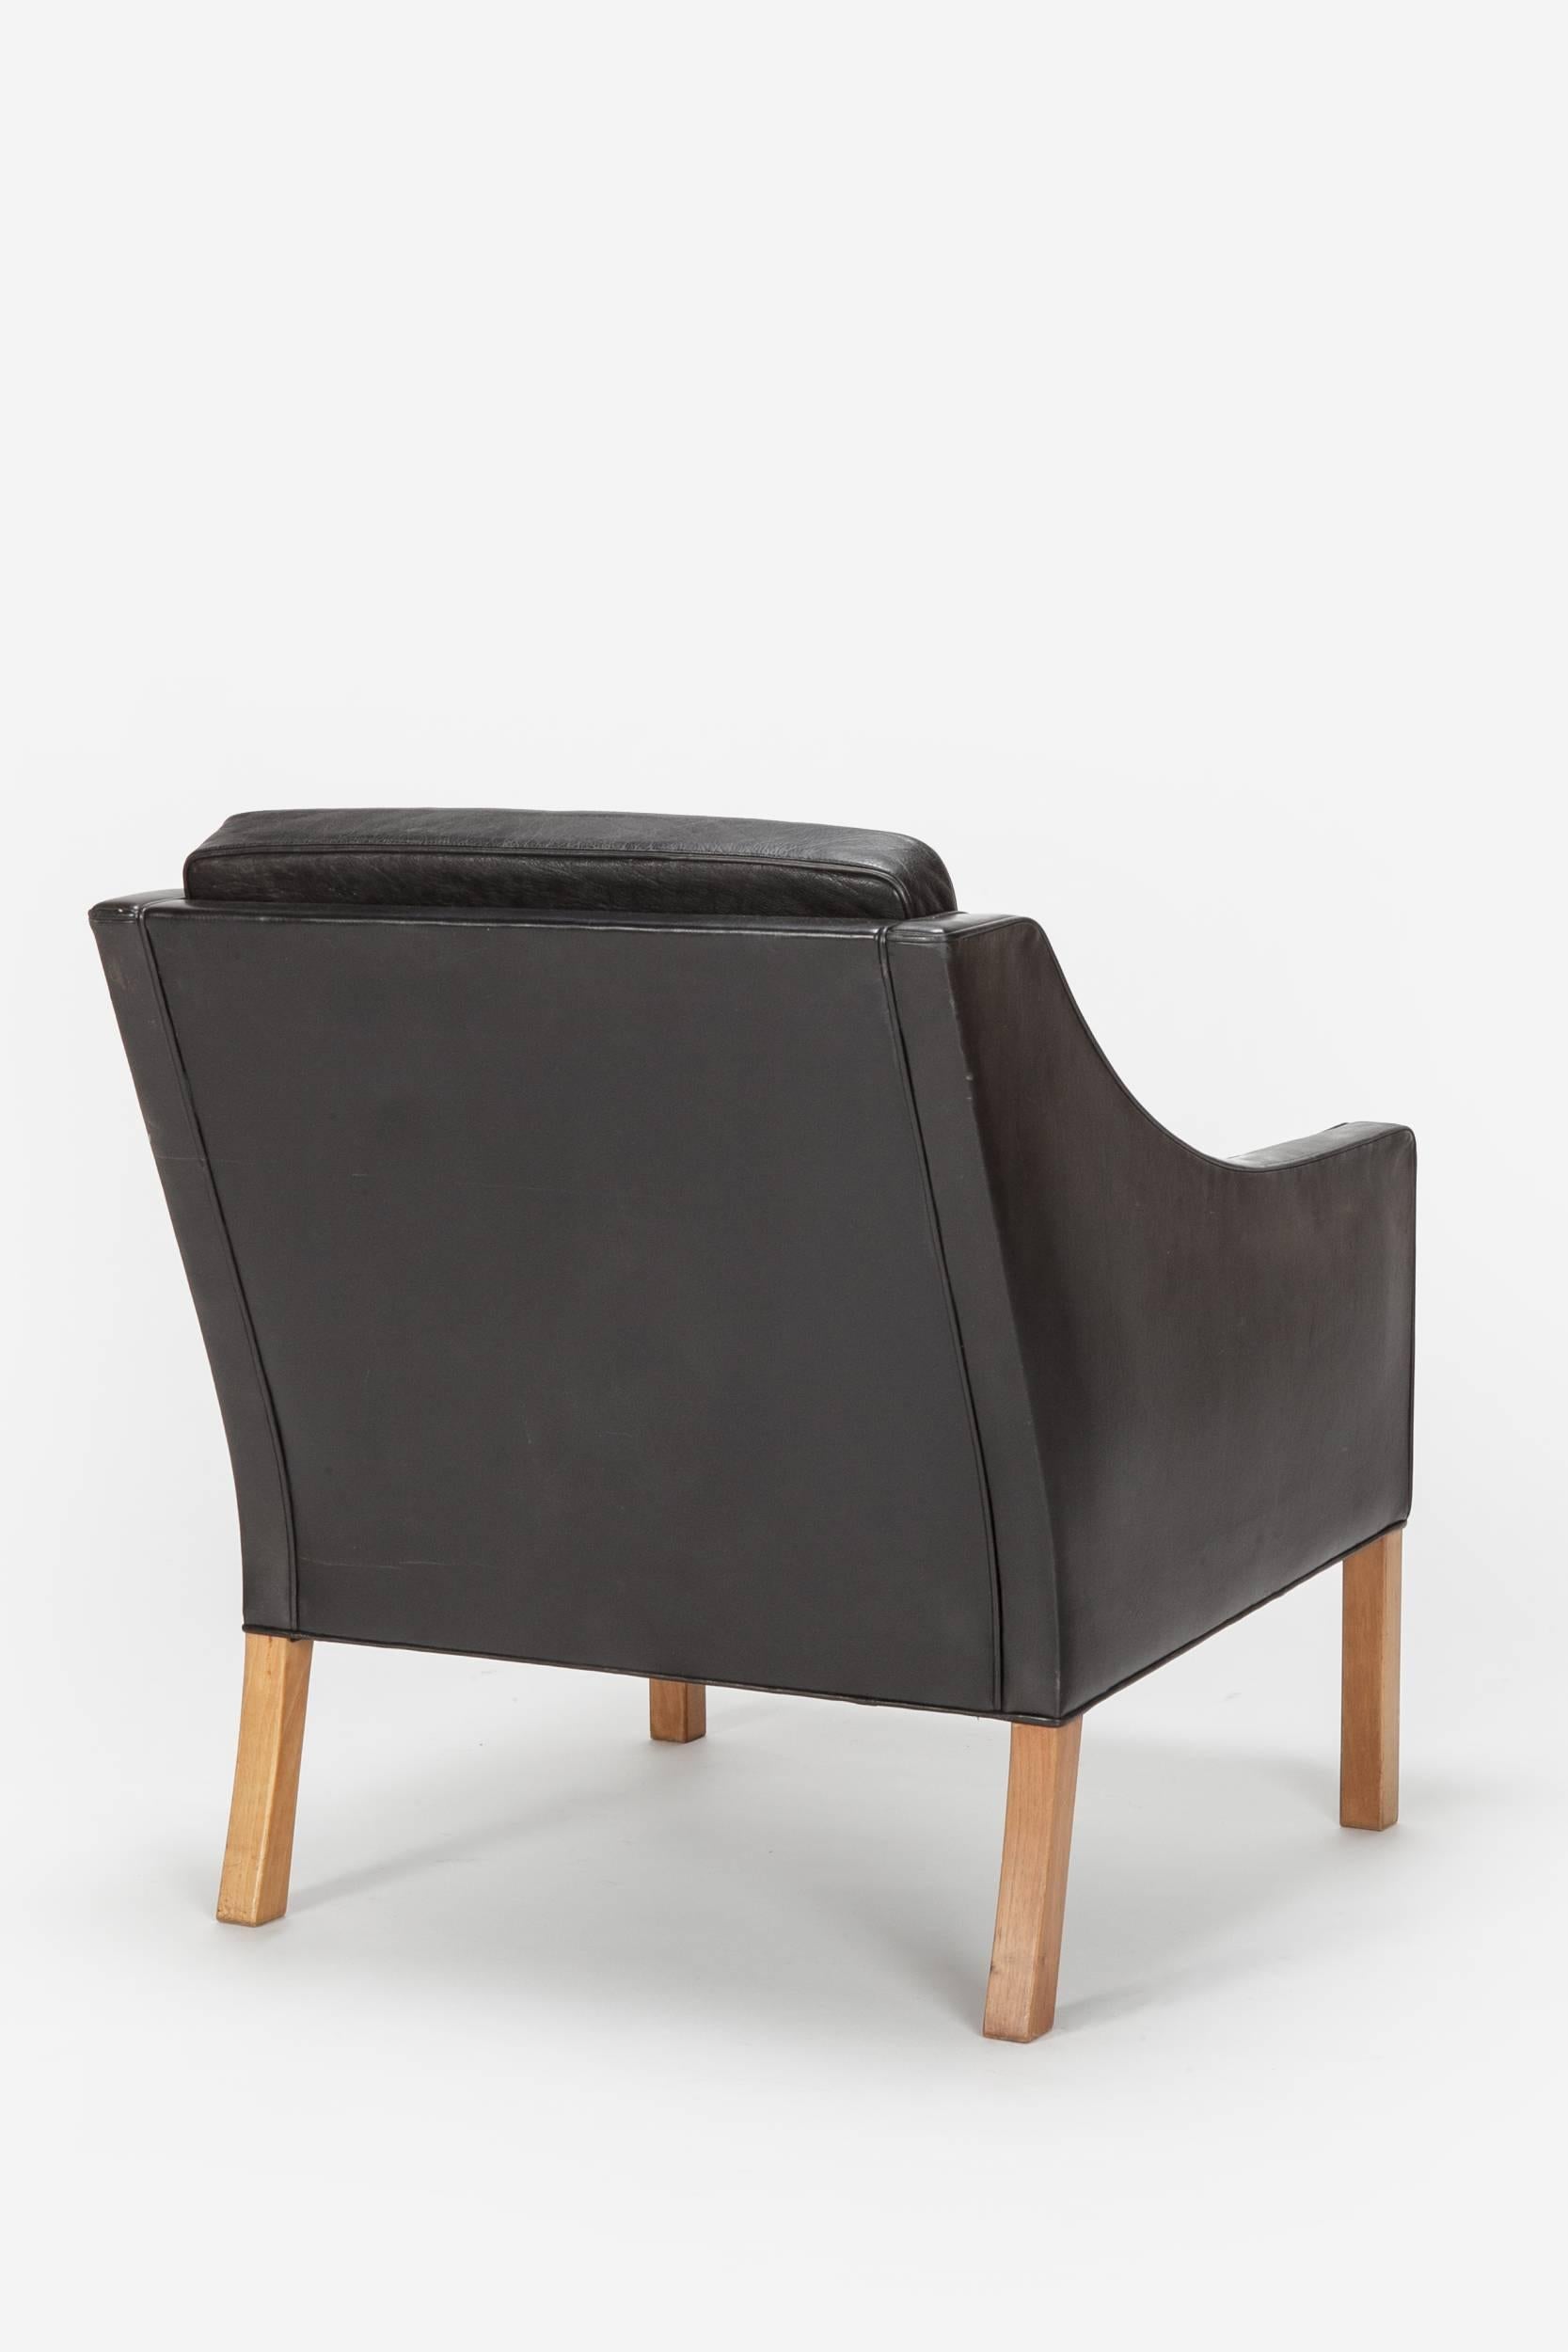 Danish Borge Mogensen Lounge Chair 2207 for Fredericia, 1963